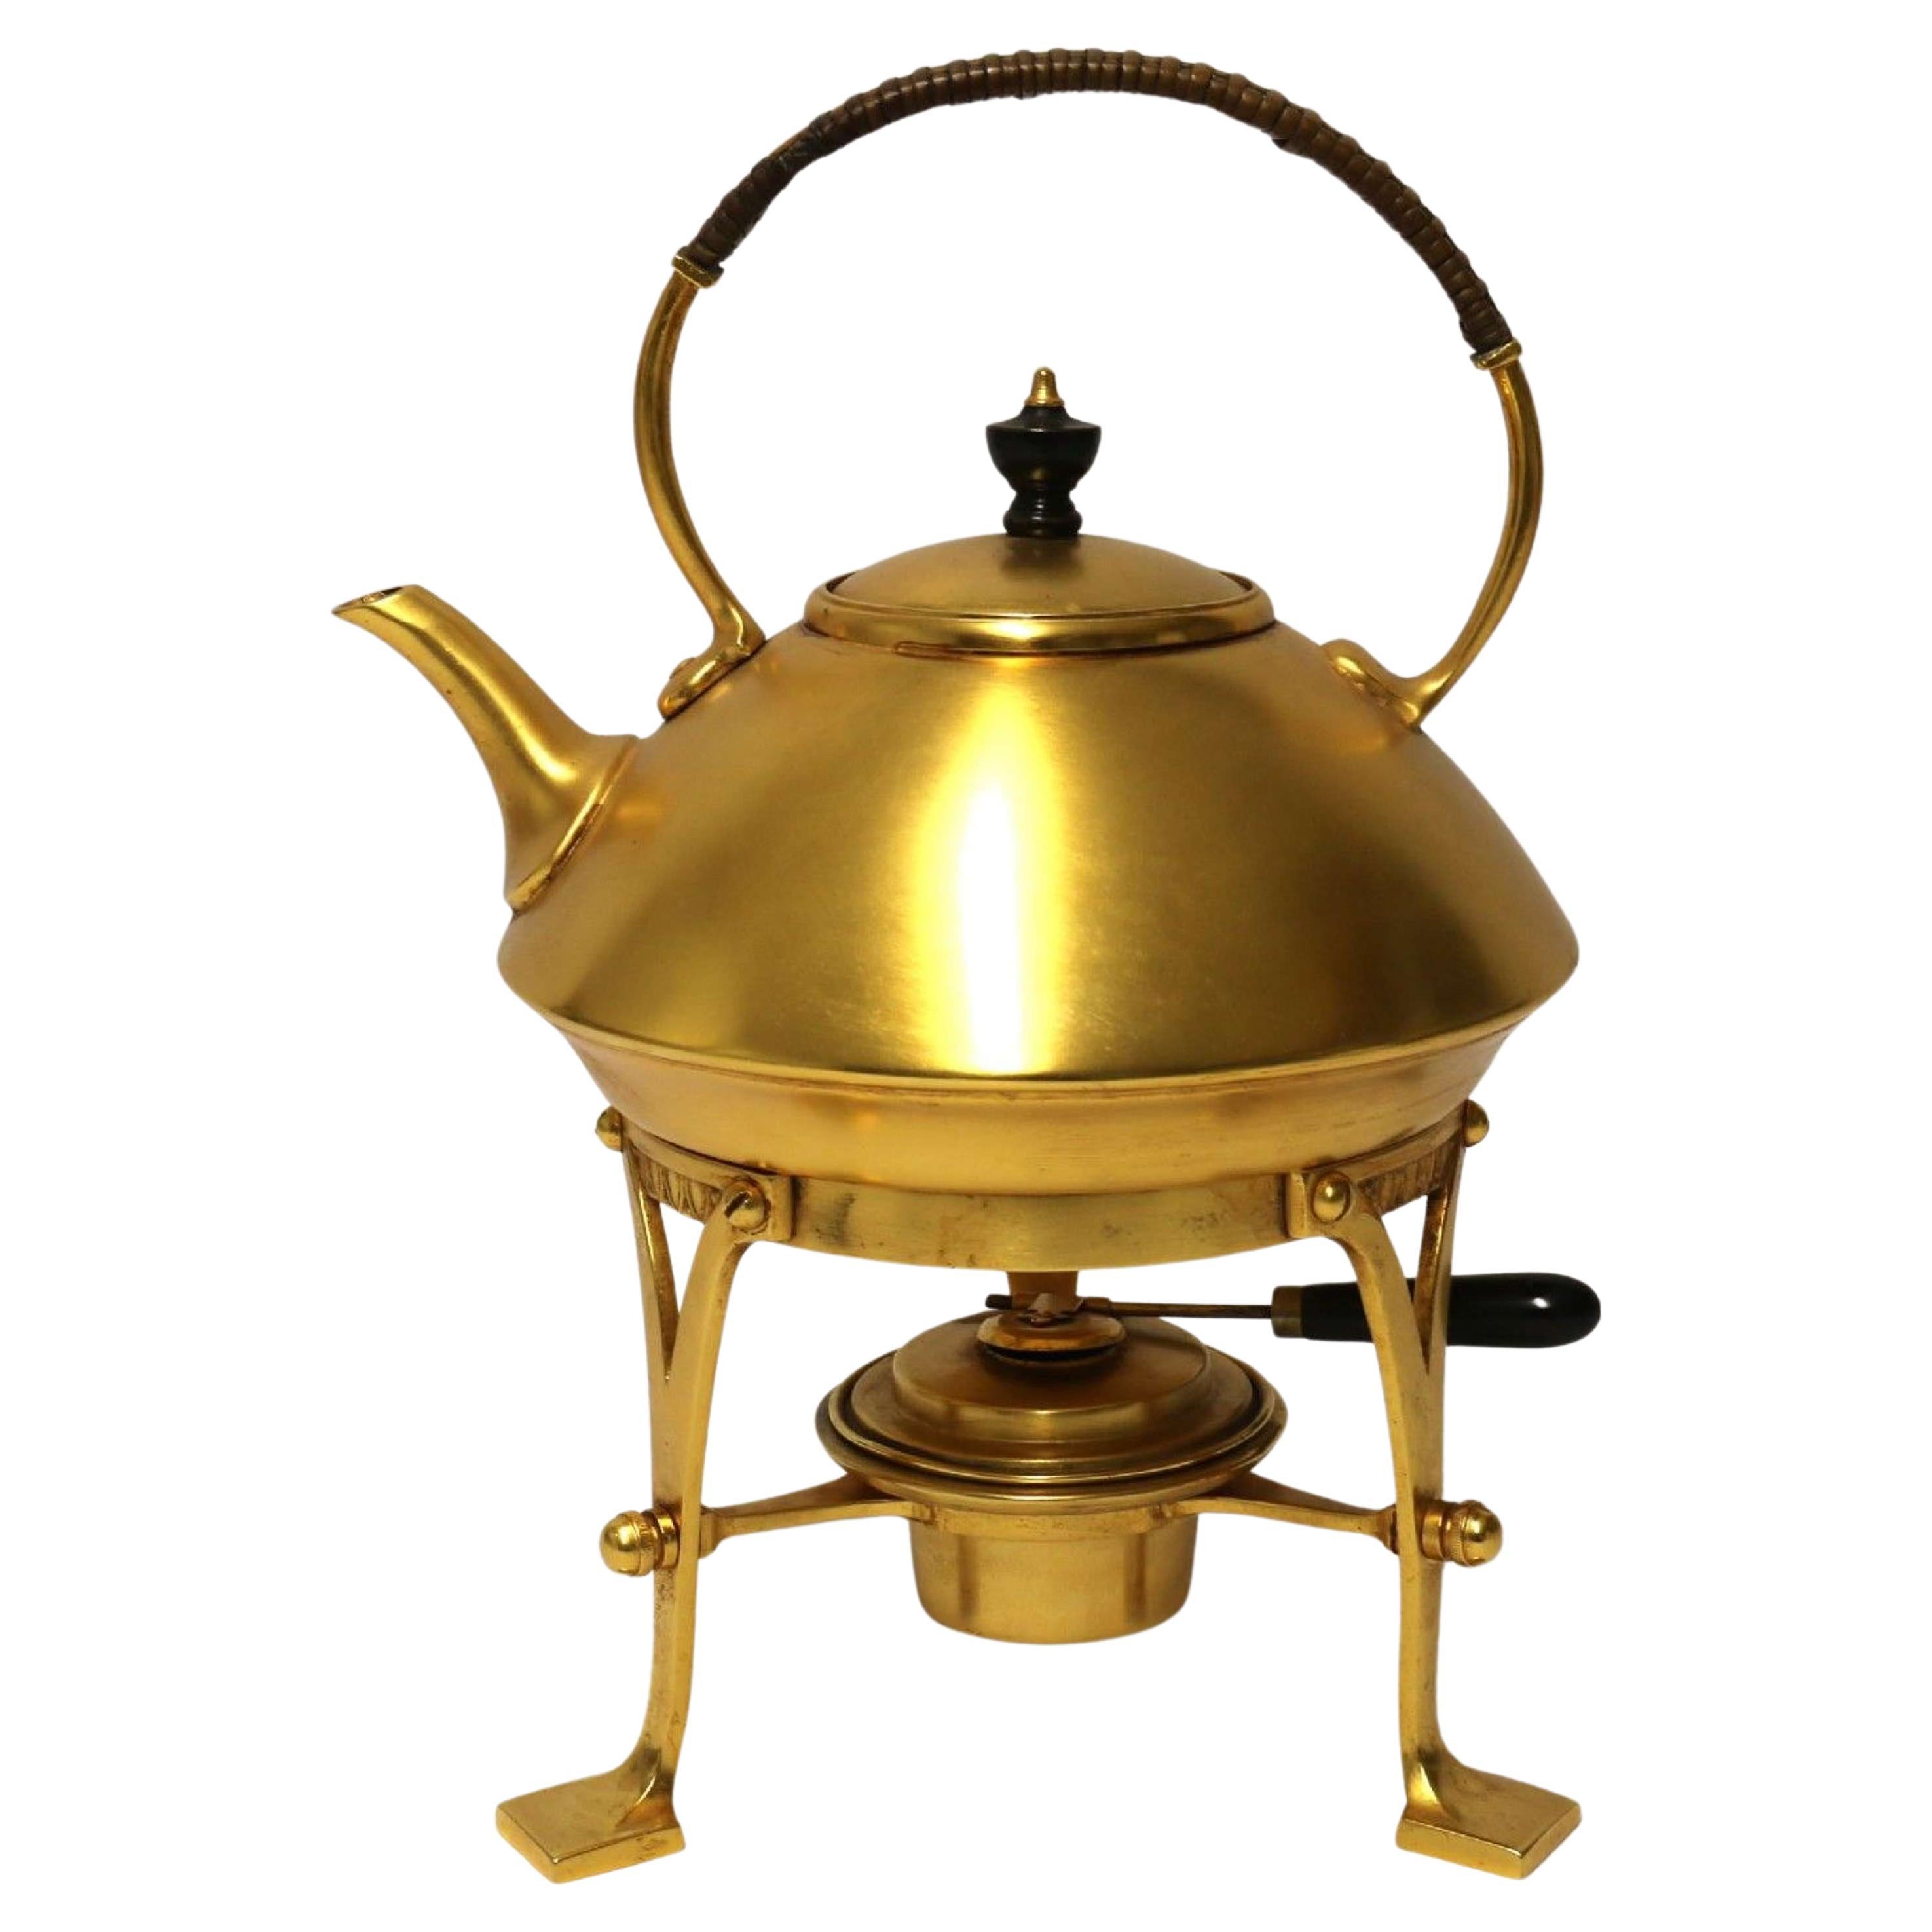  19th Century Aesthetic movement brass spirit kettle Circa 1890 For Sale